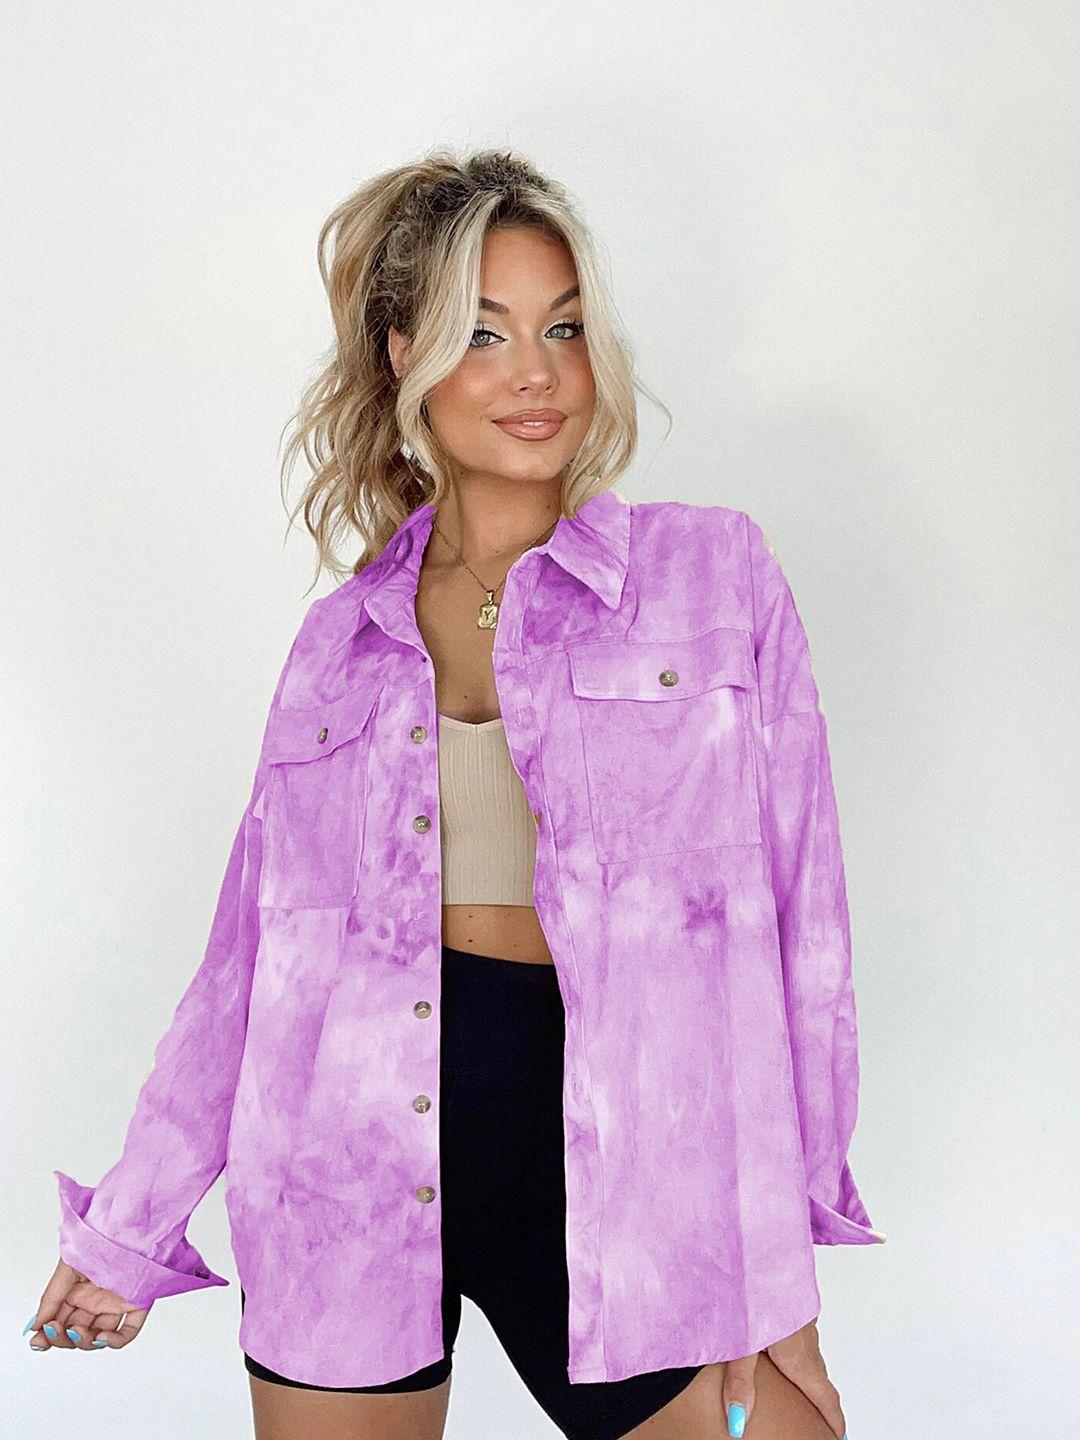 lulu & sky violet shirt style top